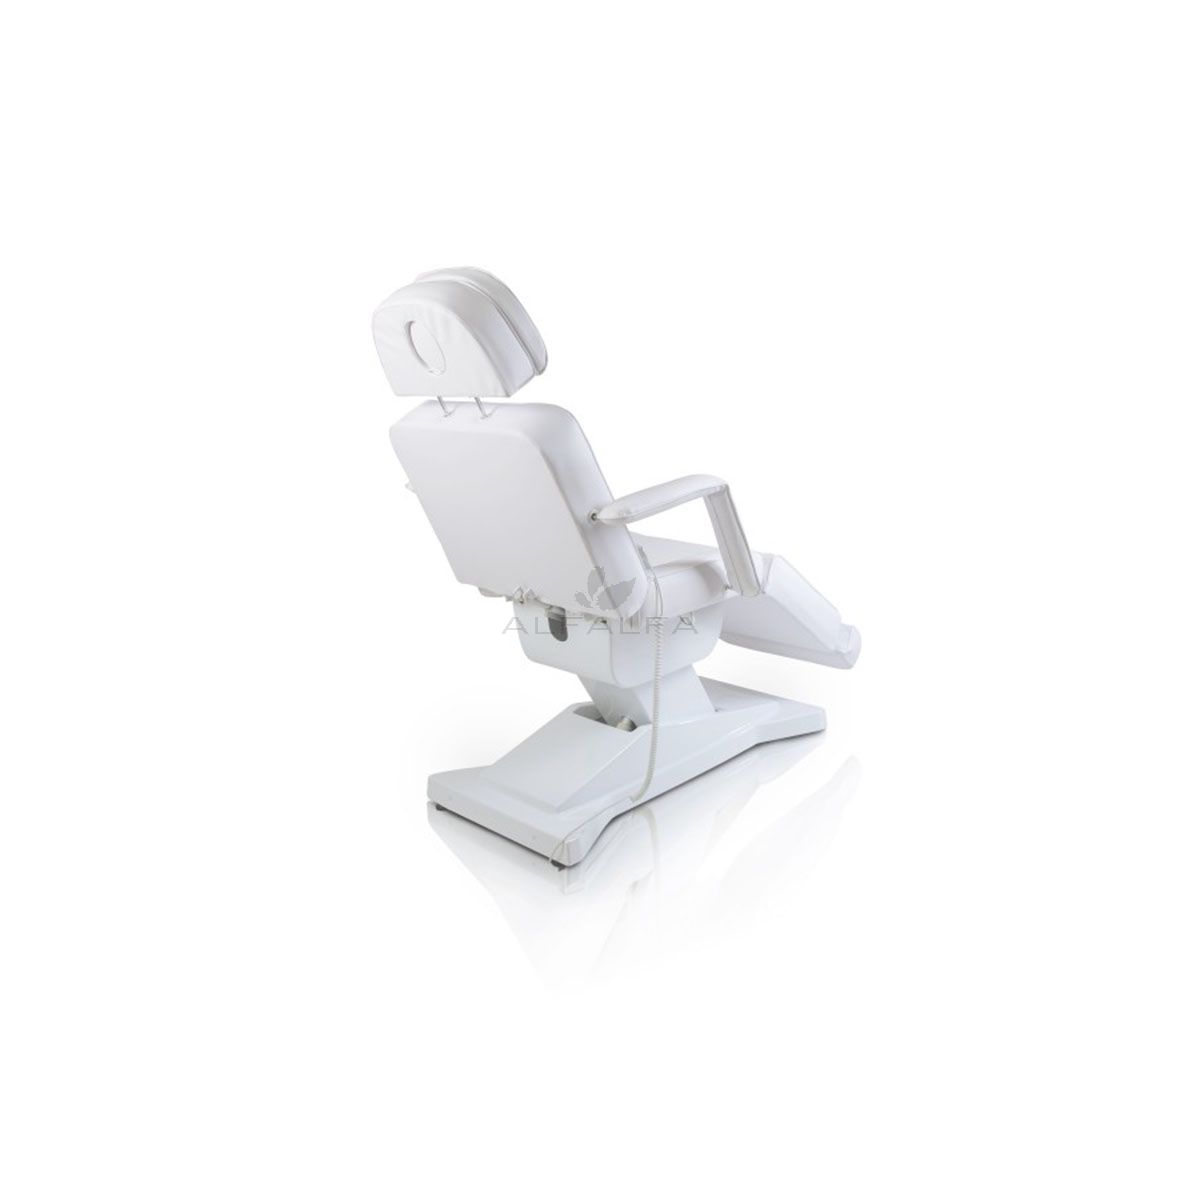 Facial Beauty Chair w/3 Motors - White